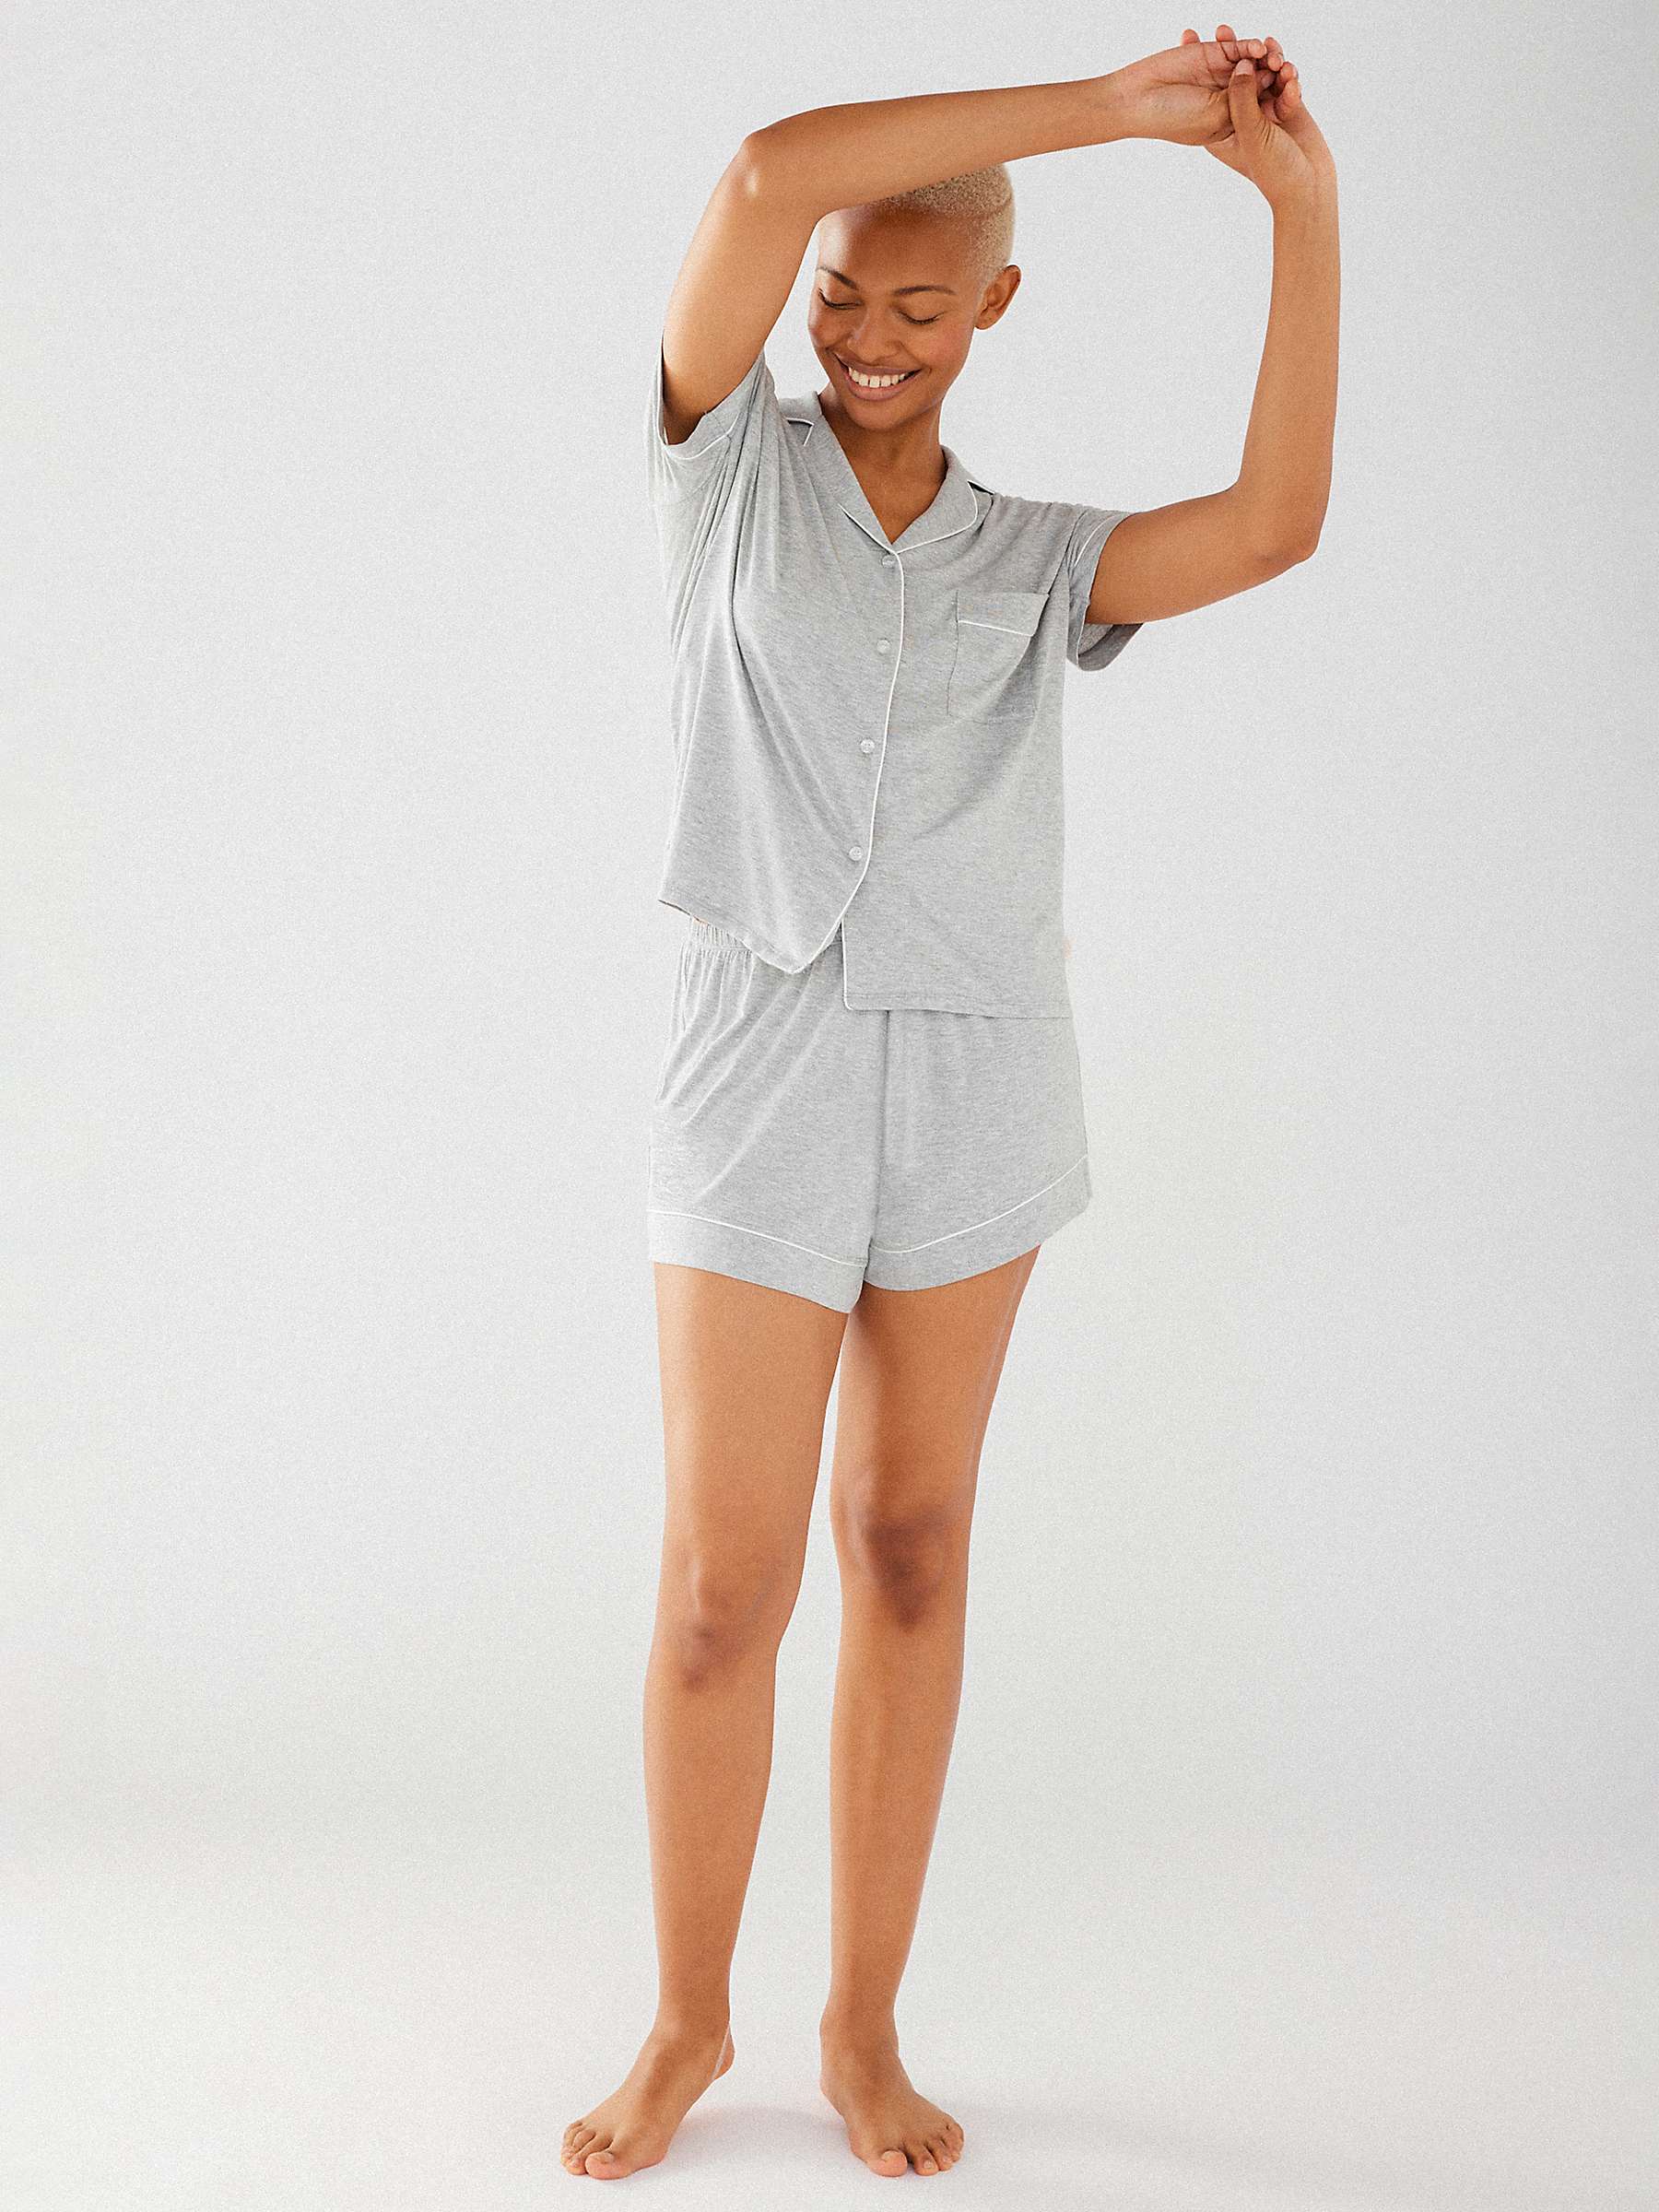 Buy Chelsea Peers Modal Short Shirt Pyjama Set Online at johnlewis.com